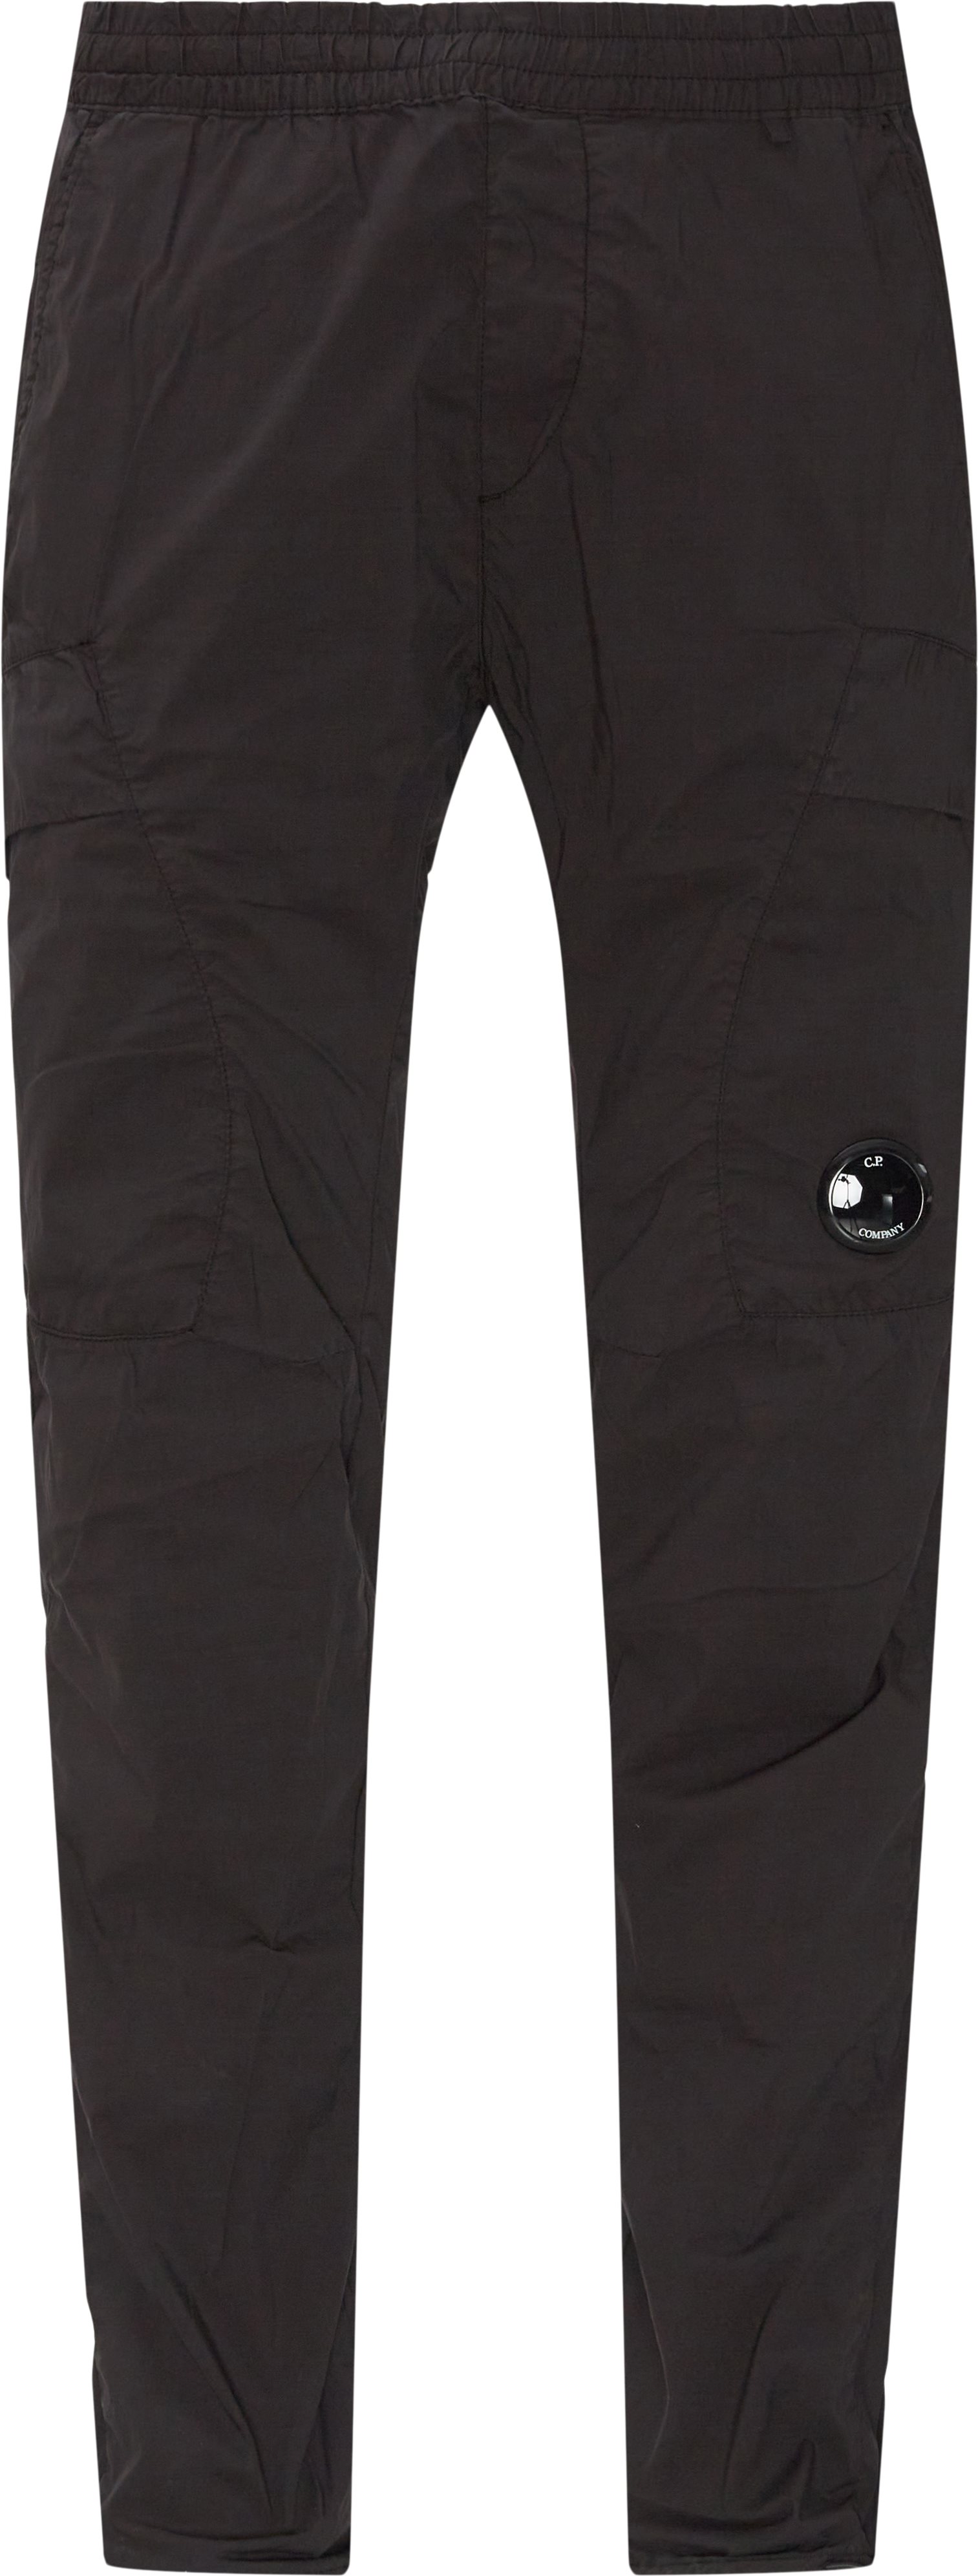 50 Fili Stretch Cargo Pants - Bukser - Regular fit - Sort